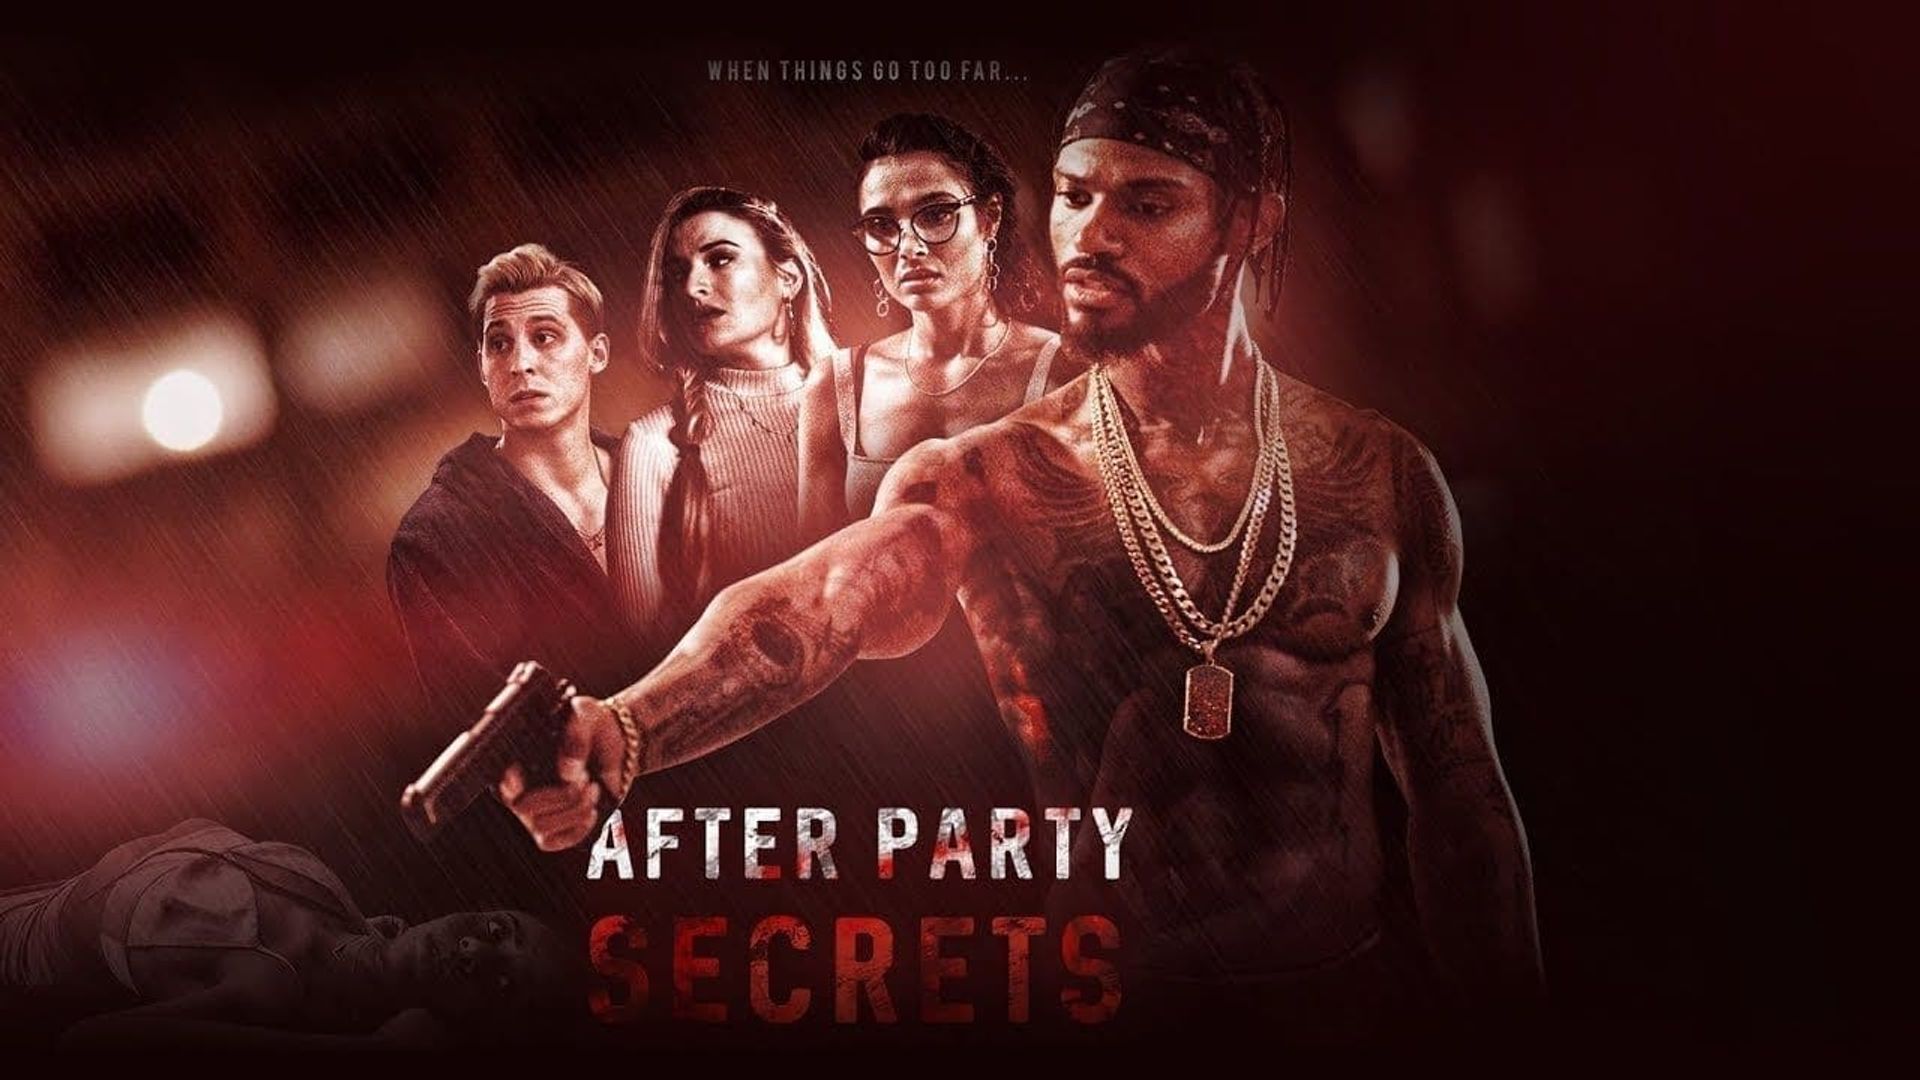 After Party Secrets background